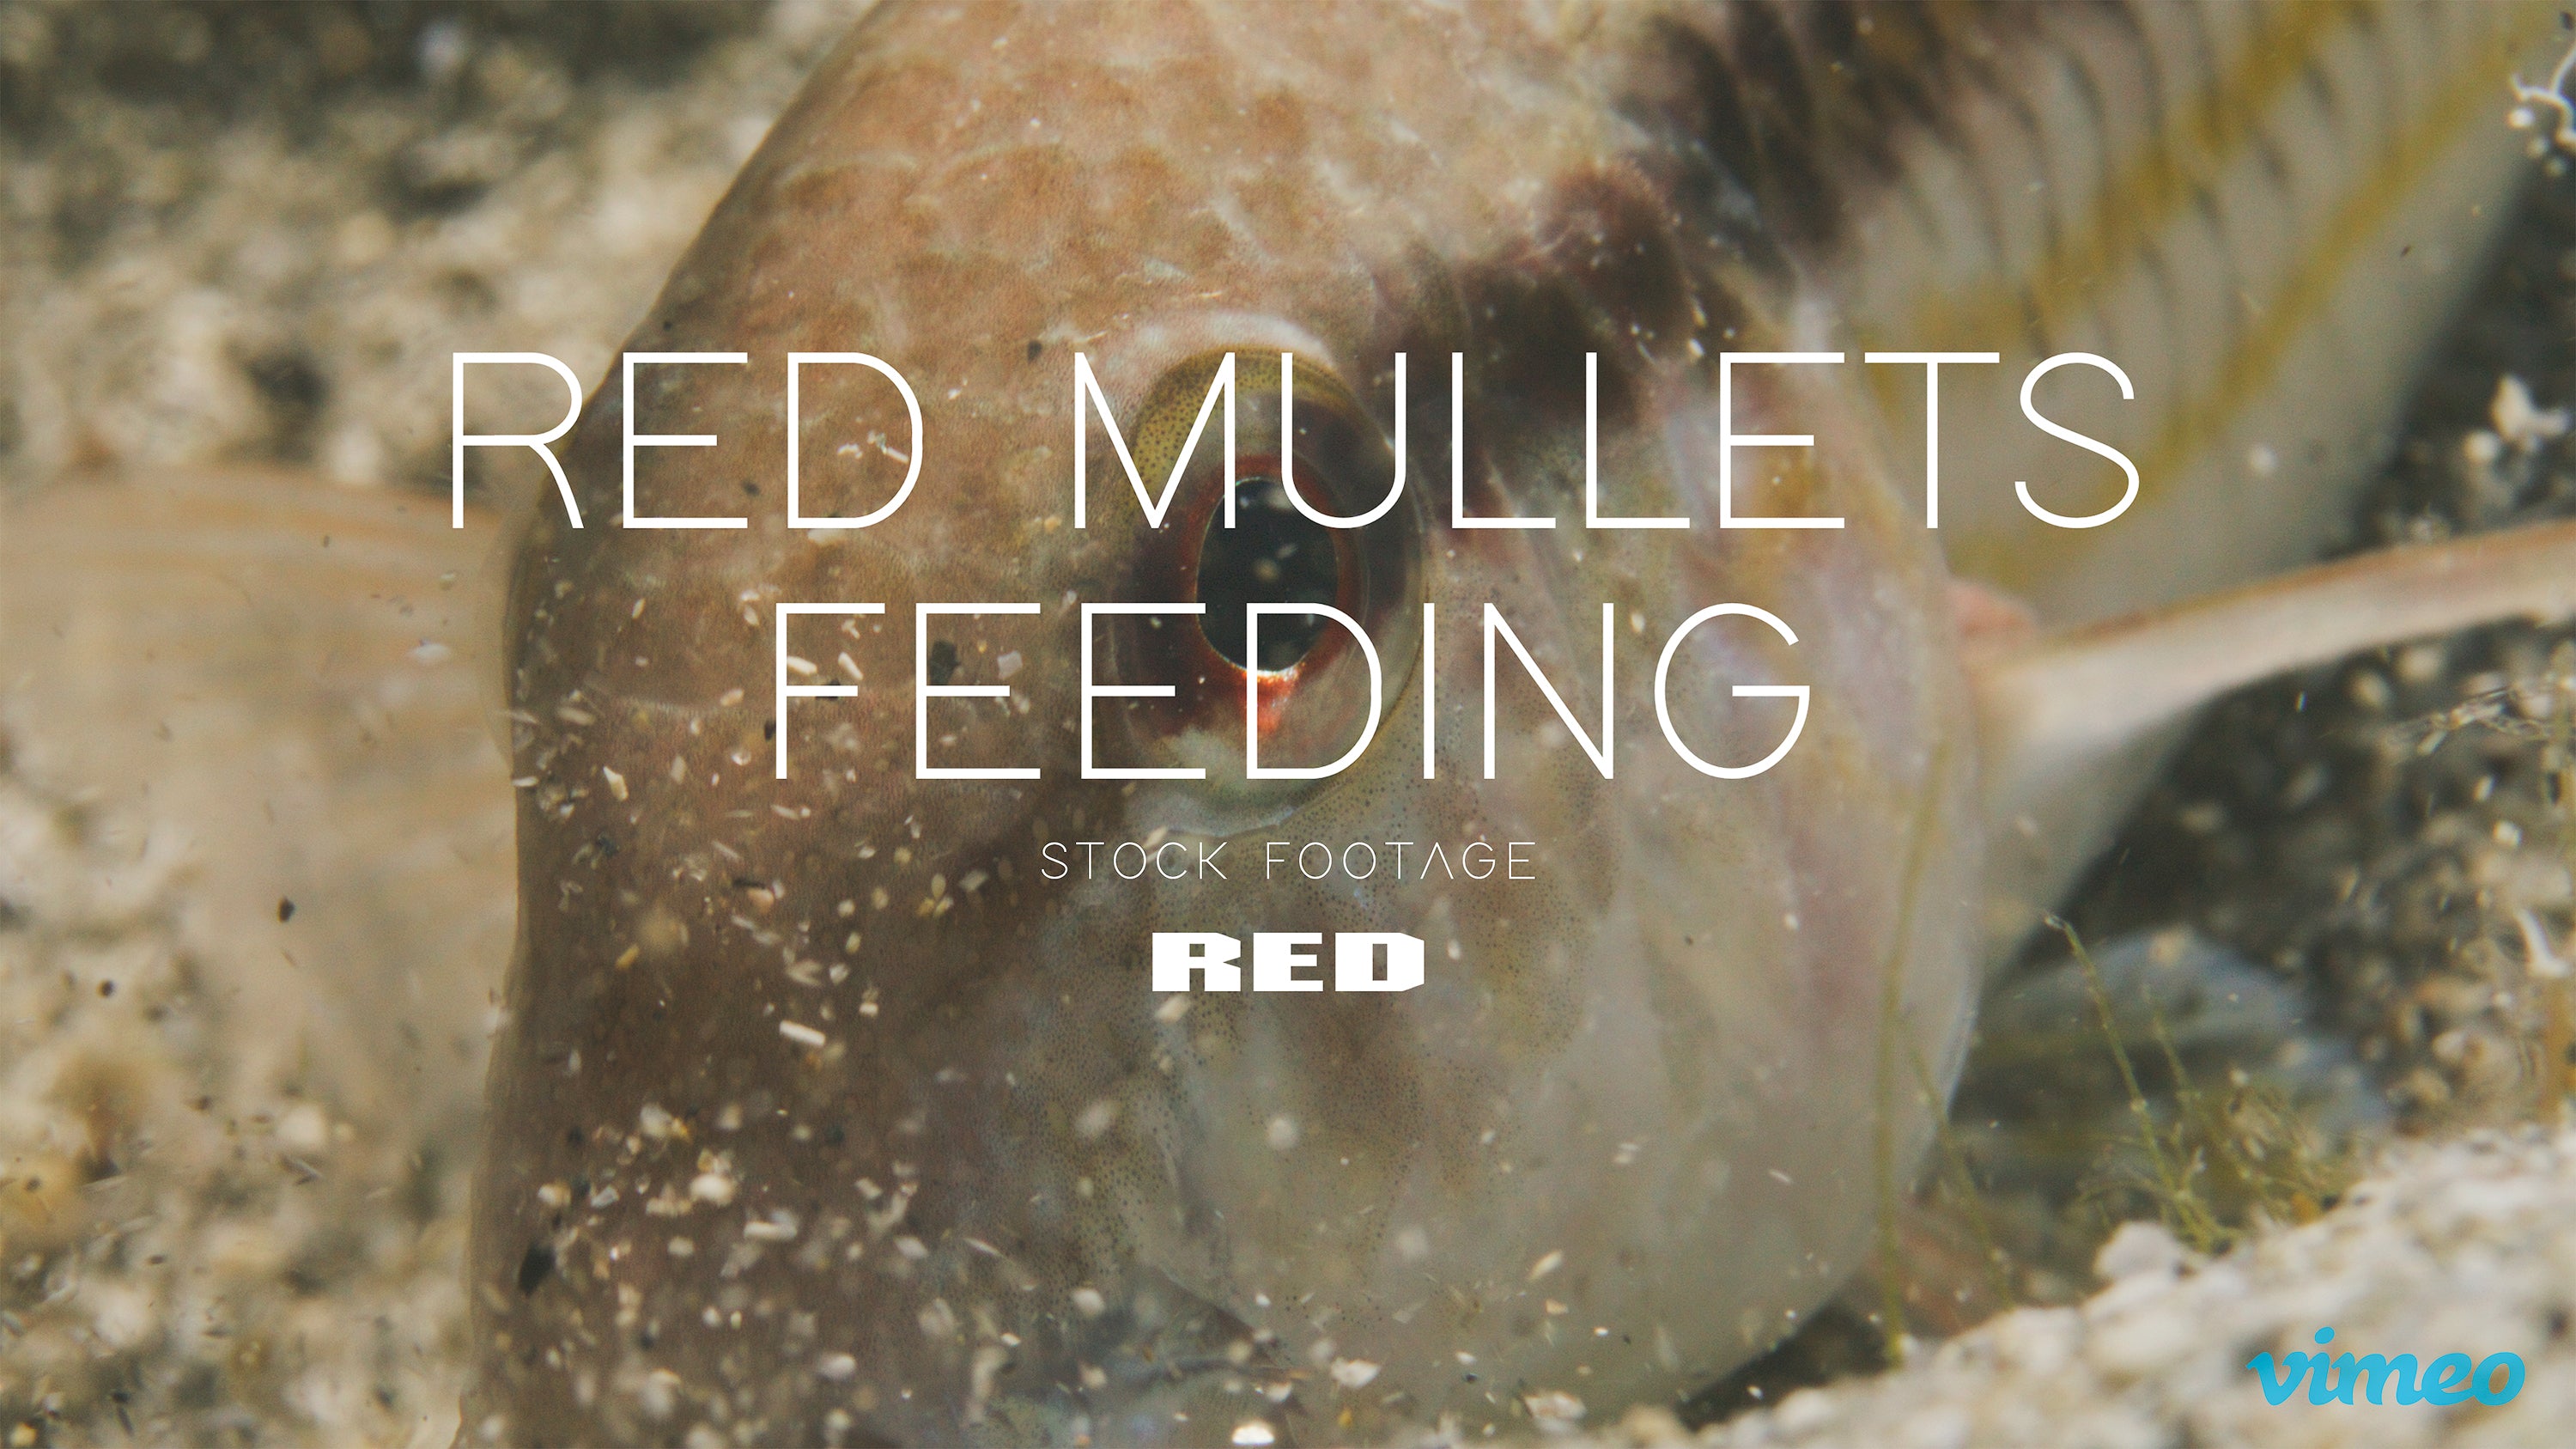 Red mullets feeding